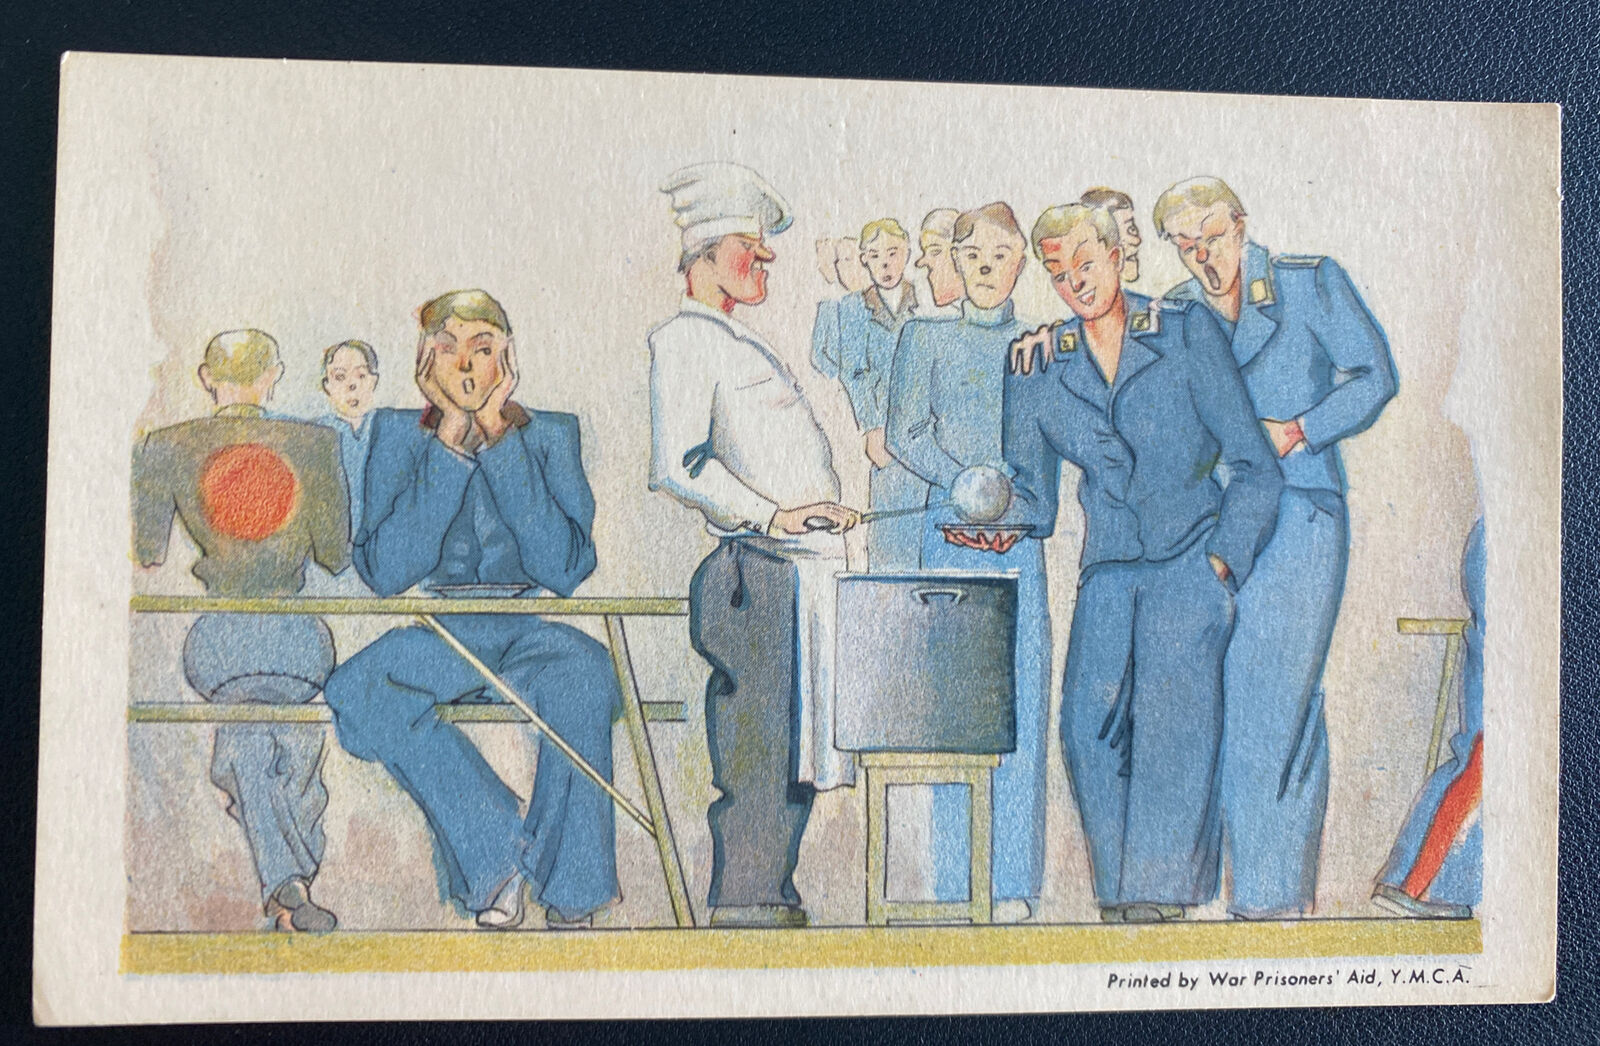 Mint USA Color Picture Postcard YMCA War Prisoners Dinner Time